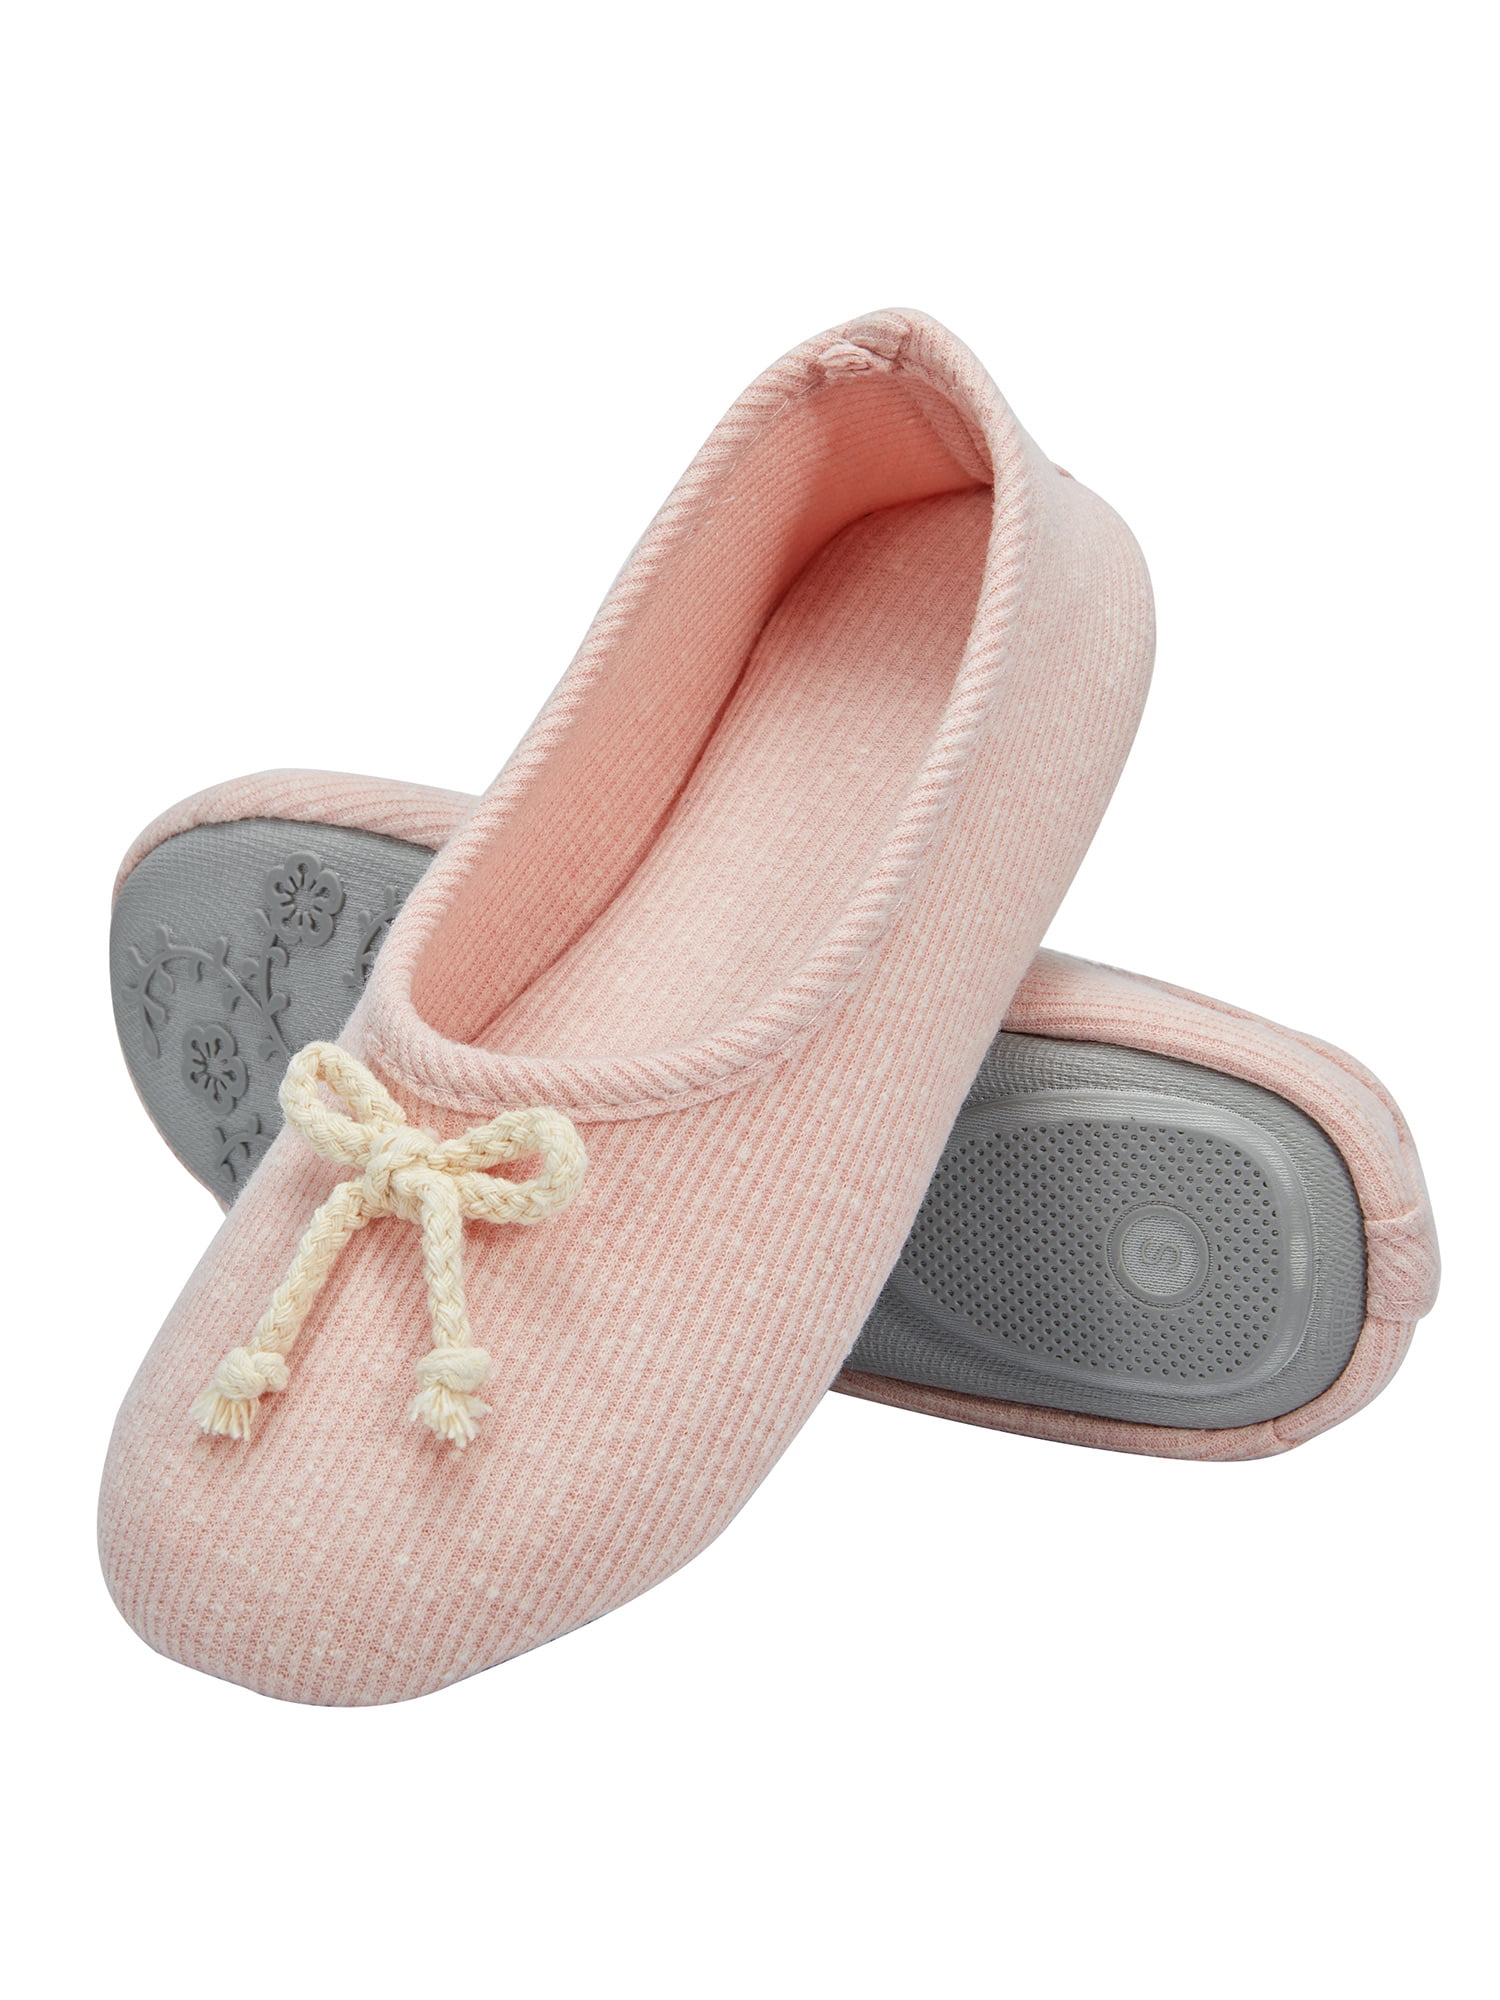 Womens Winter Ballerina Style Slippers Cosy Fleece Lining TPR Soles Pink Sz 5-10 